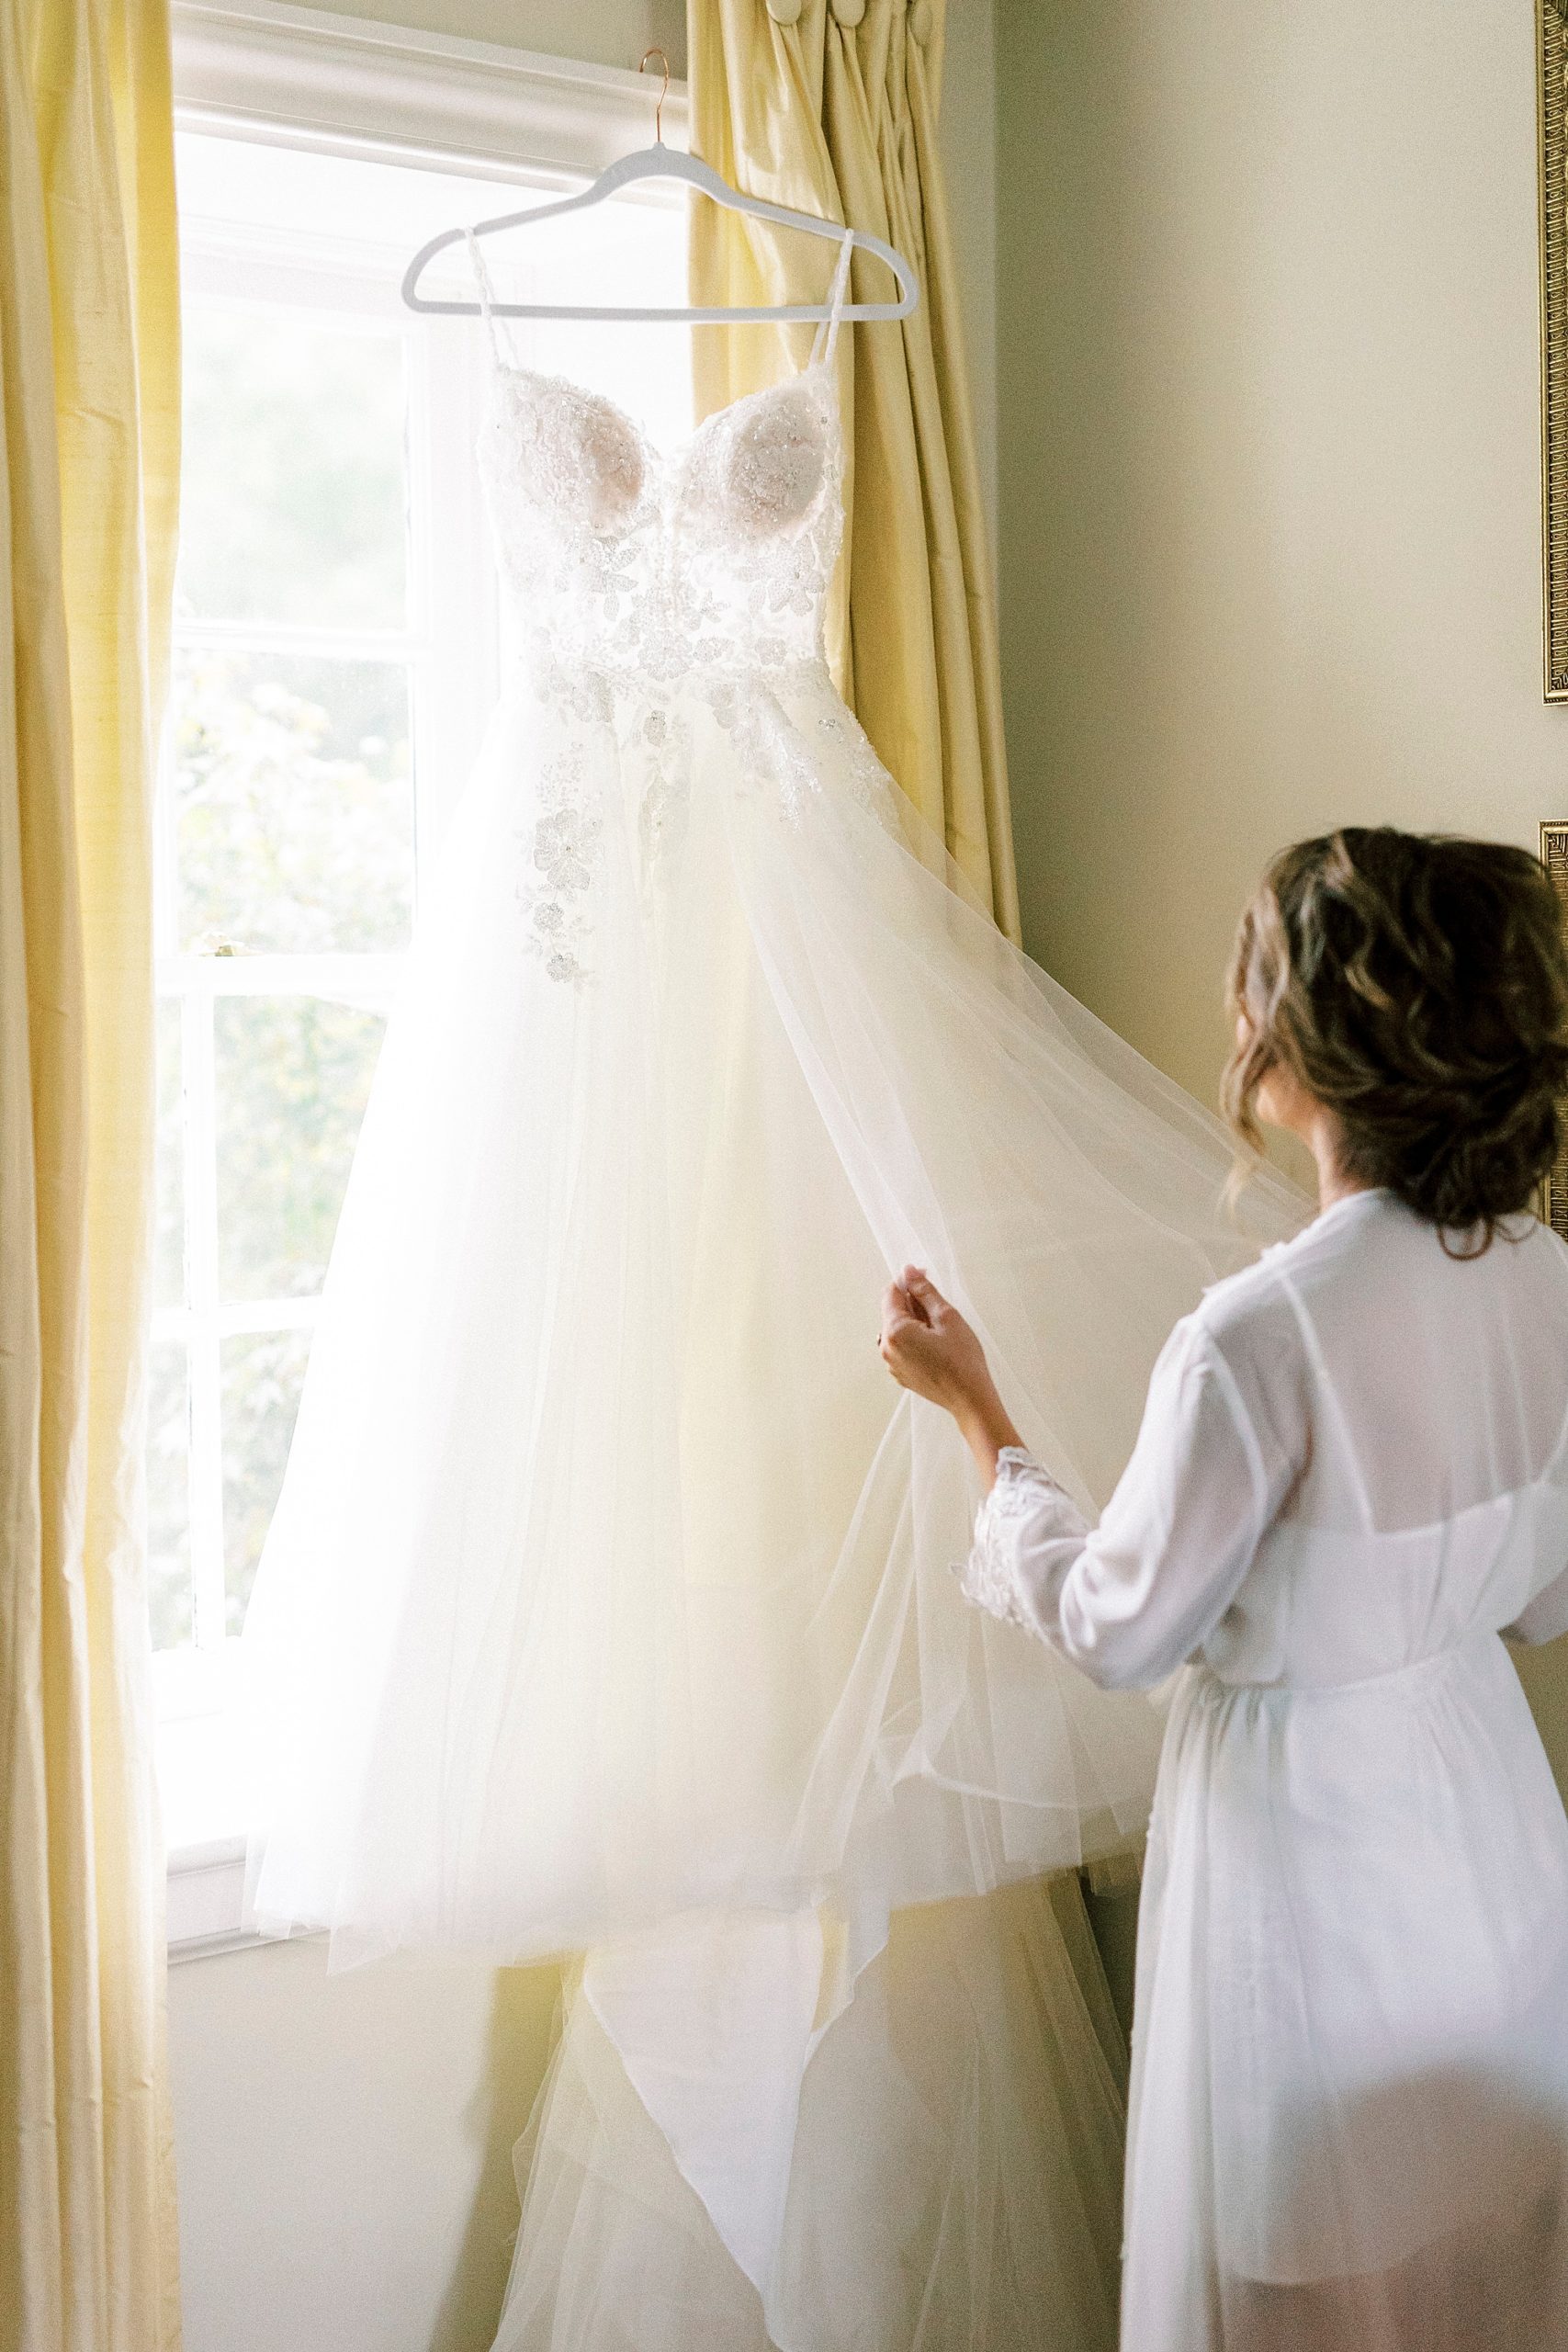 bride looks at wedding dress hanging in window 